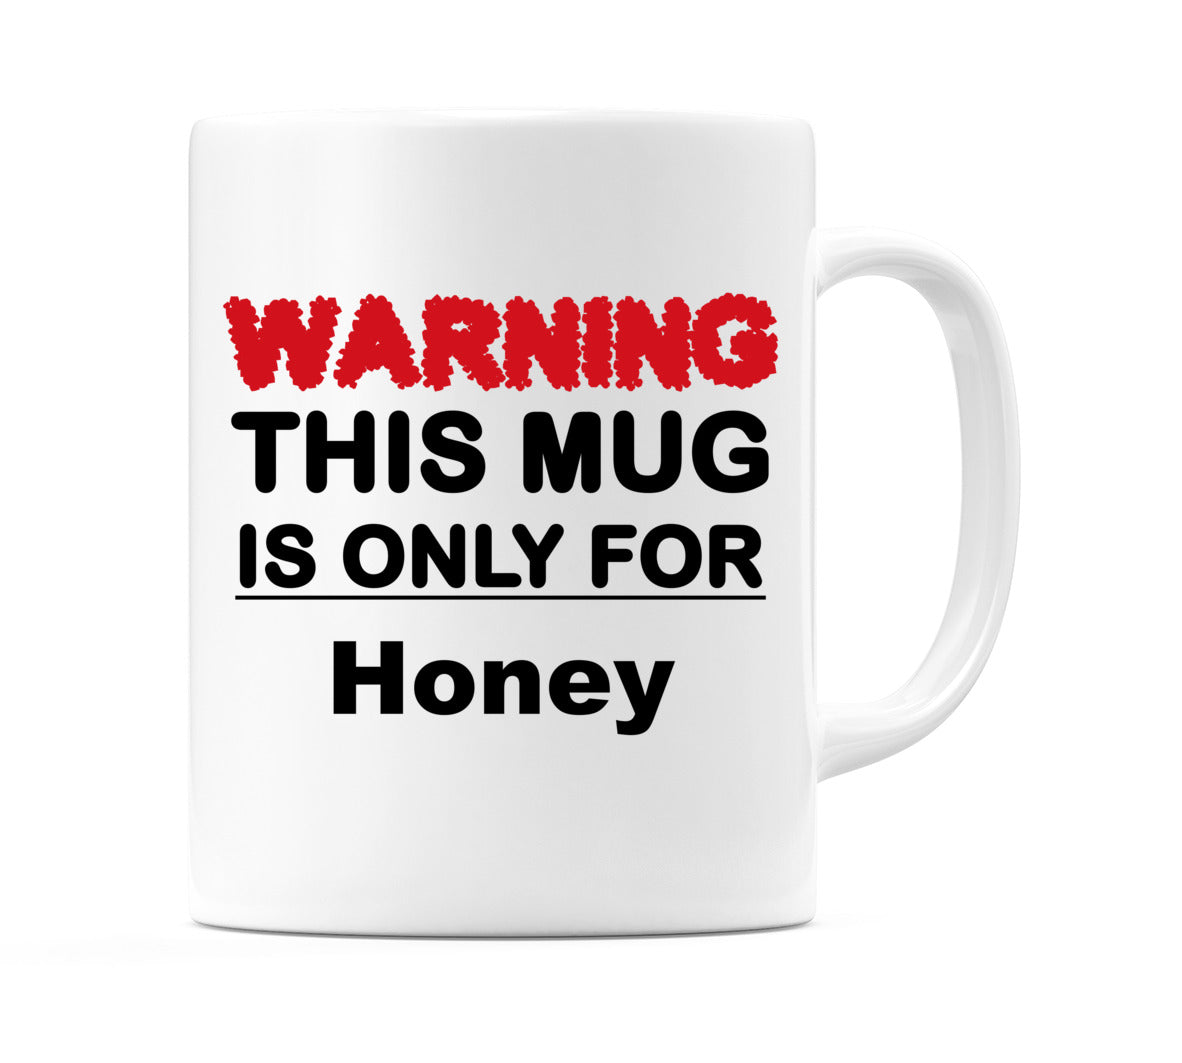 Warning This Mug is ONLY for Honey Mug